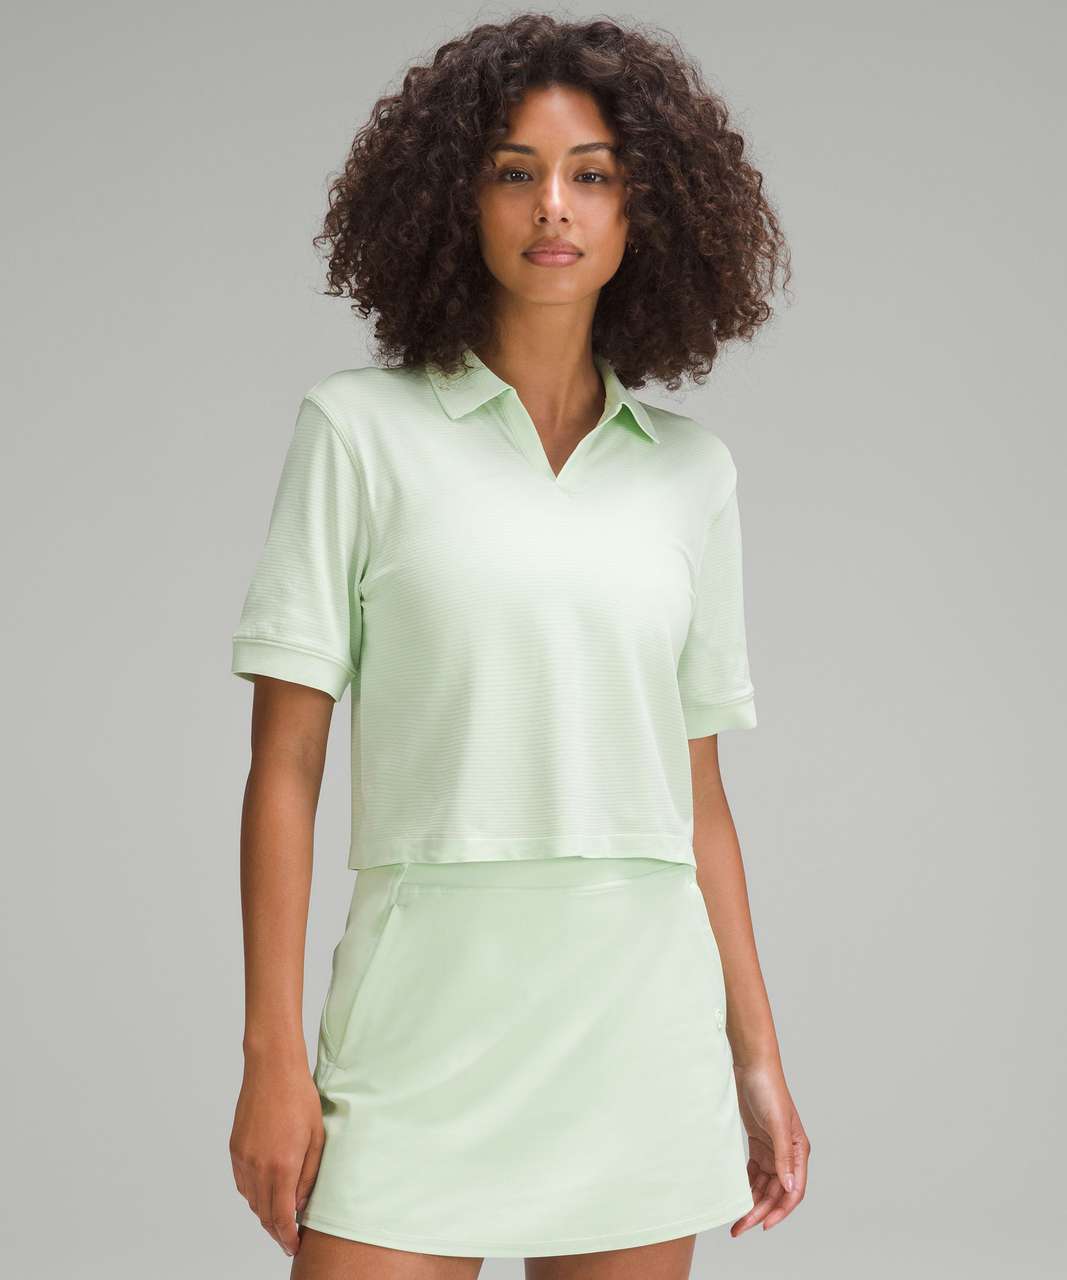 Lululemon Swiftly Tech Relaxed-Fit Polo Shirt - Kohlrabi Green / Kohlrabi Green